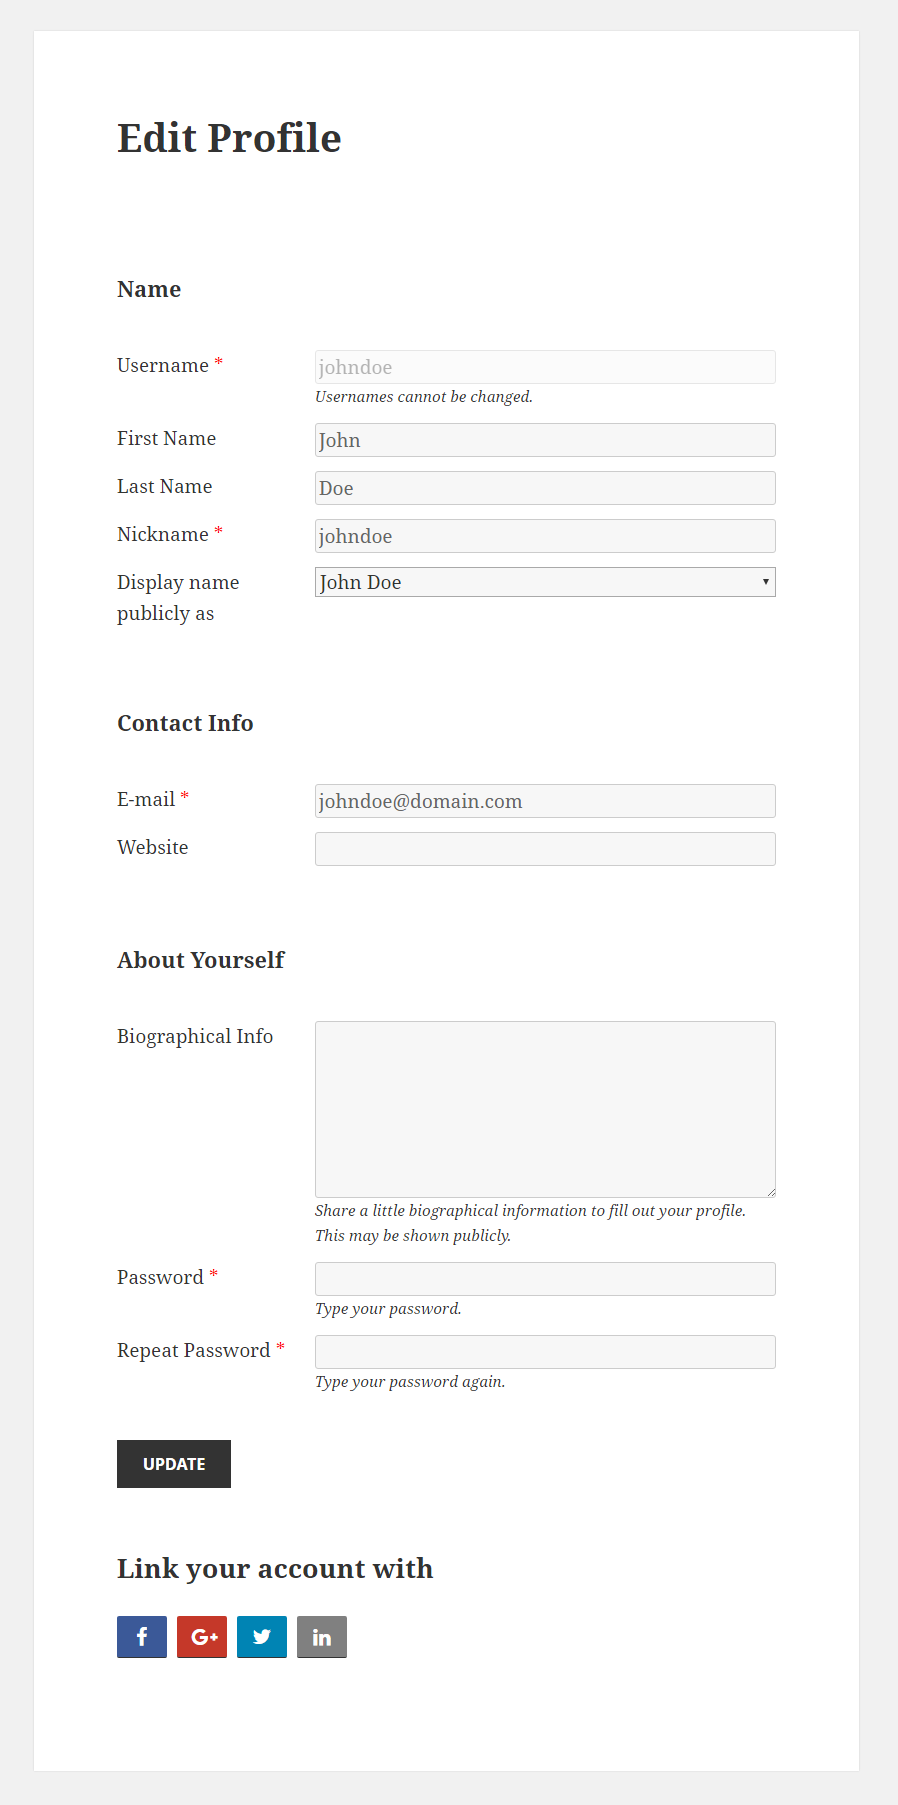 Profile Builder Pro - Social Connect - Using Social Connect - LinkedIn Edit Profile Form